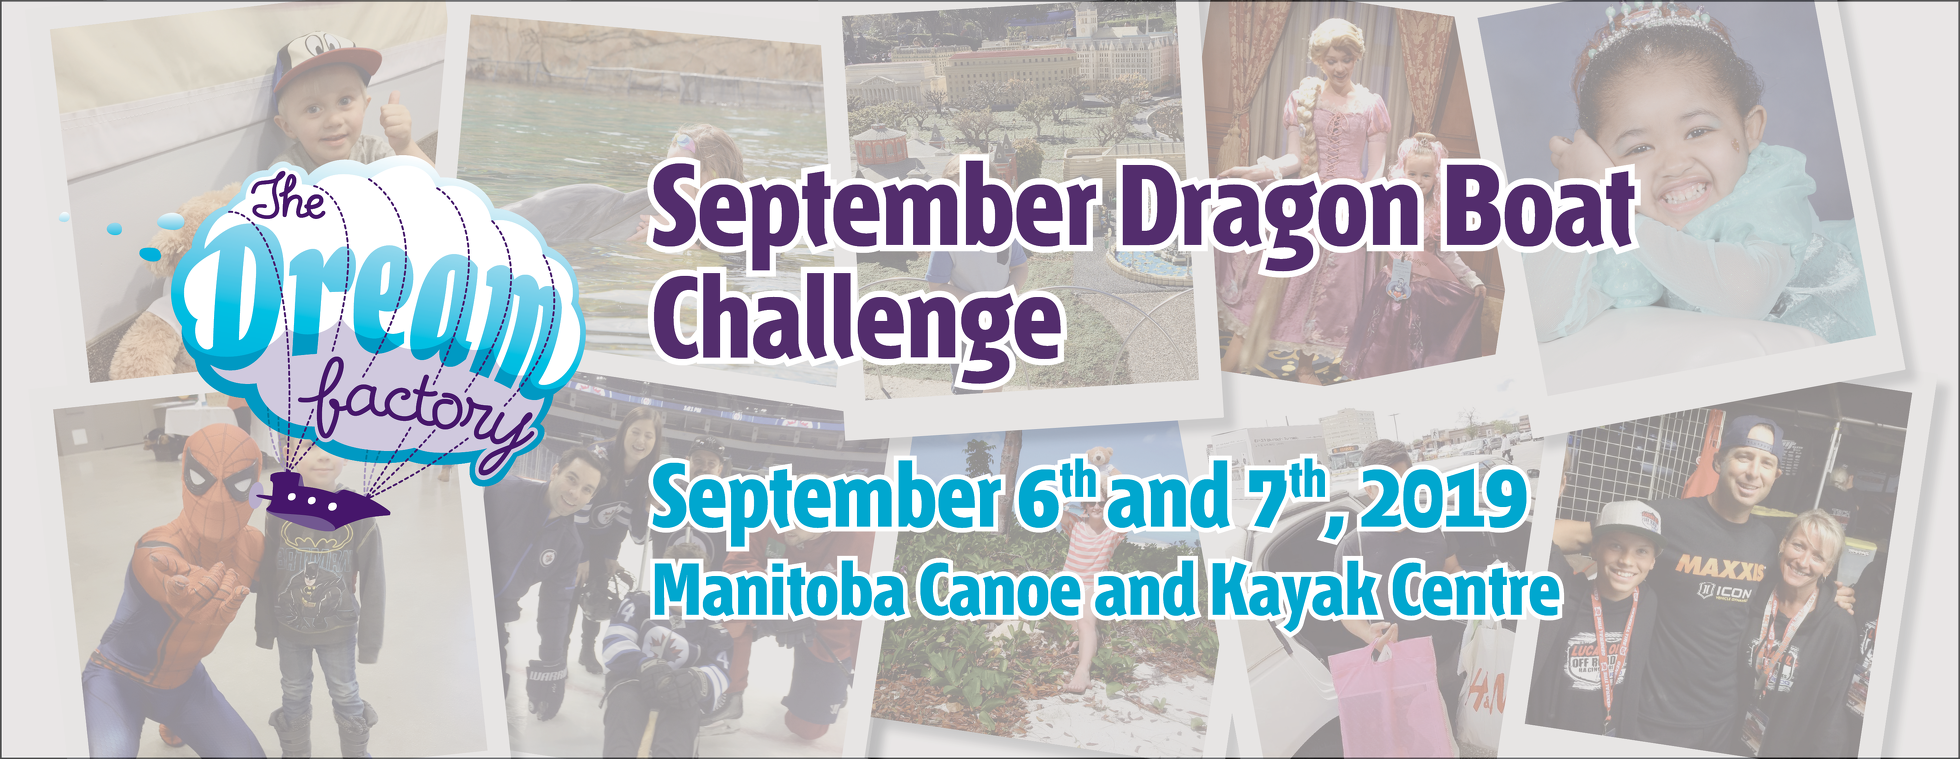 The Dream Factory September Dragon Boat Challenge